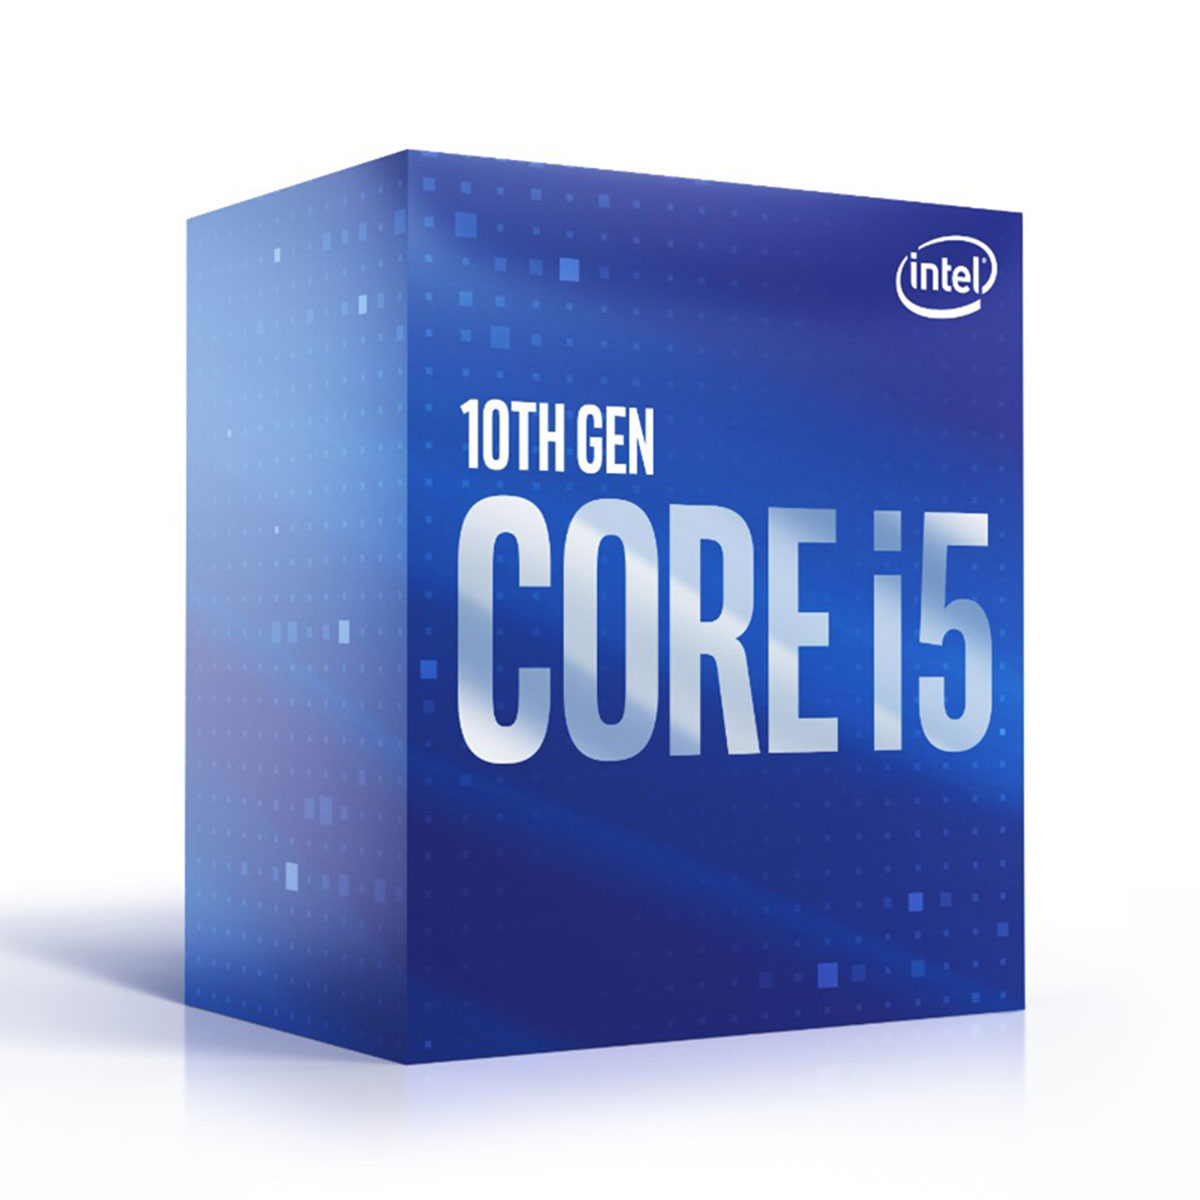 Intel Core i5-10400 2.90GHz (Comet Lake) Socket LGA1200 Processor - Retail